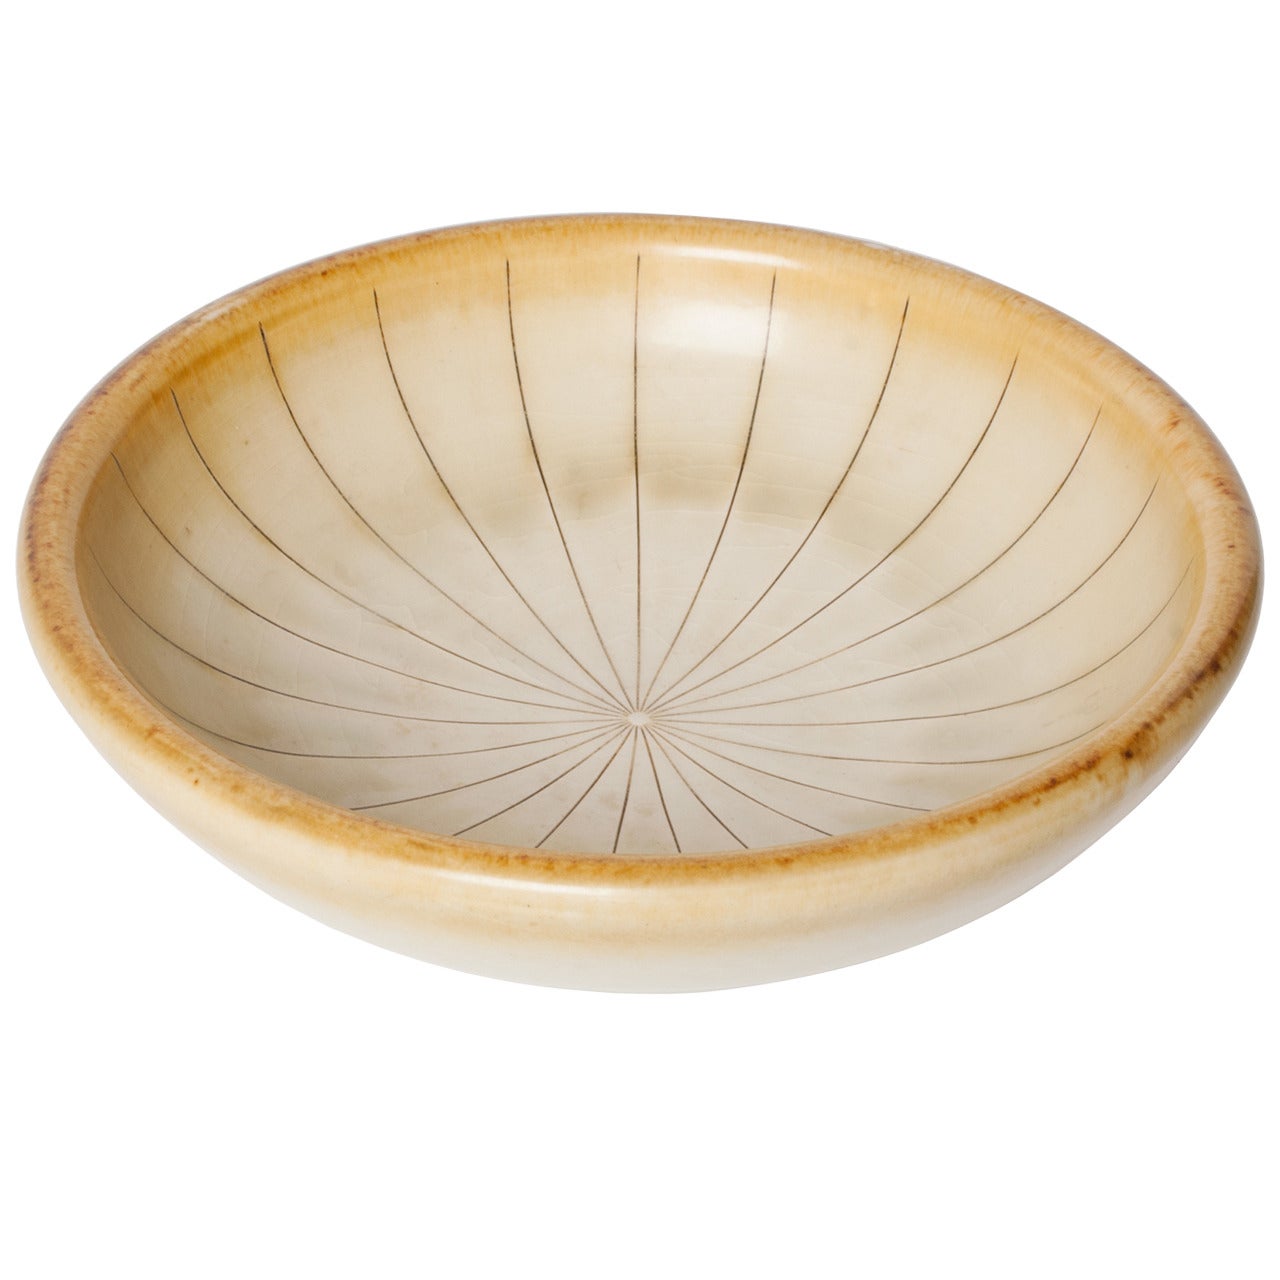 Scandinavian Modern Ceramic Bowl in Golden Glaze by Gertrud Lonegren, Rorstrand